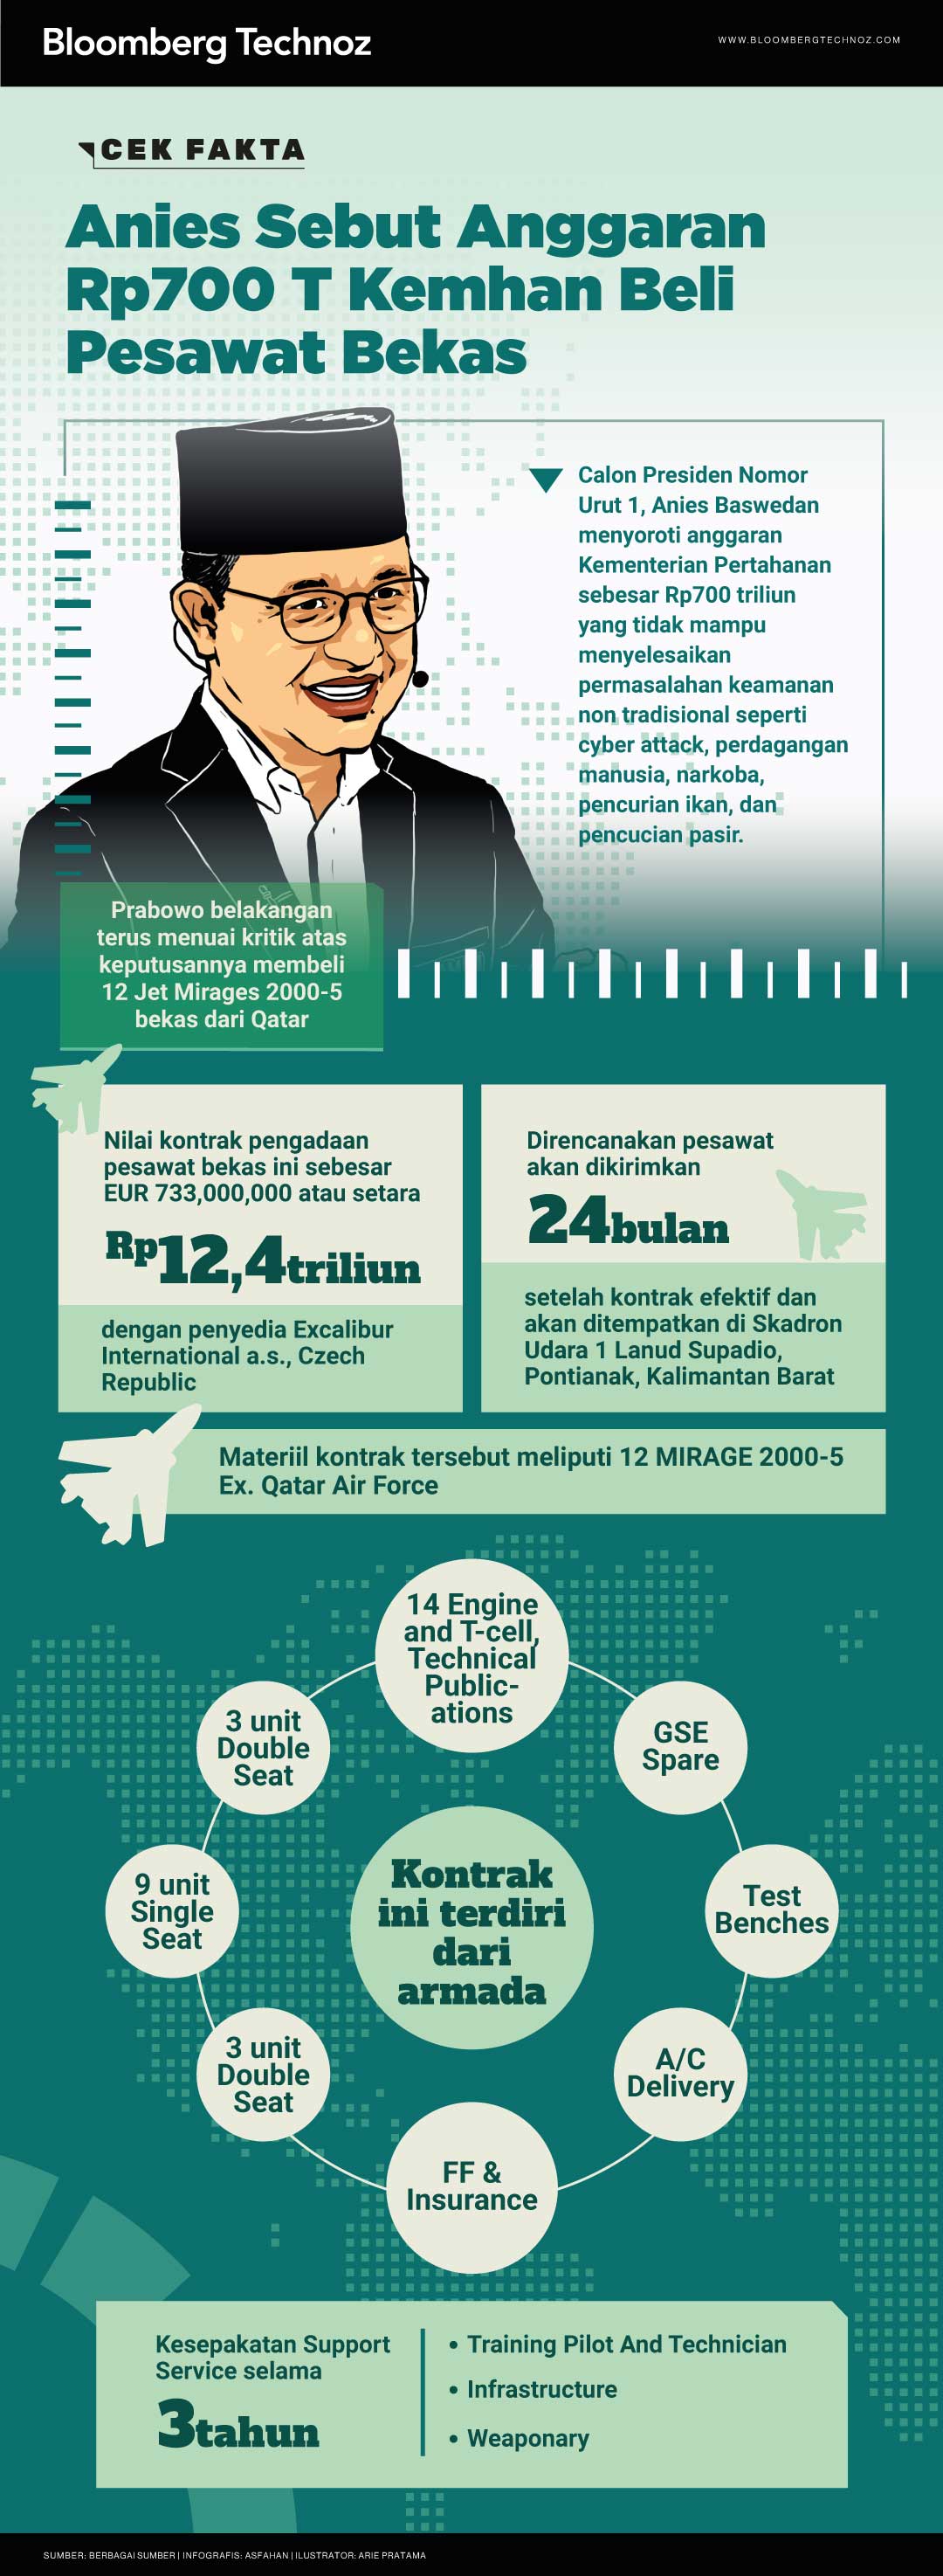 Infografis Cek Fakta Anies Sebut Anggaran Rp700 T Kemhan Beli Pesawat Bekas (Bloomberg Technoz/Arie Pratama)